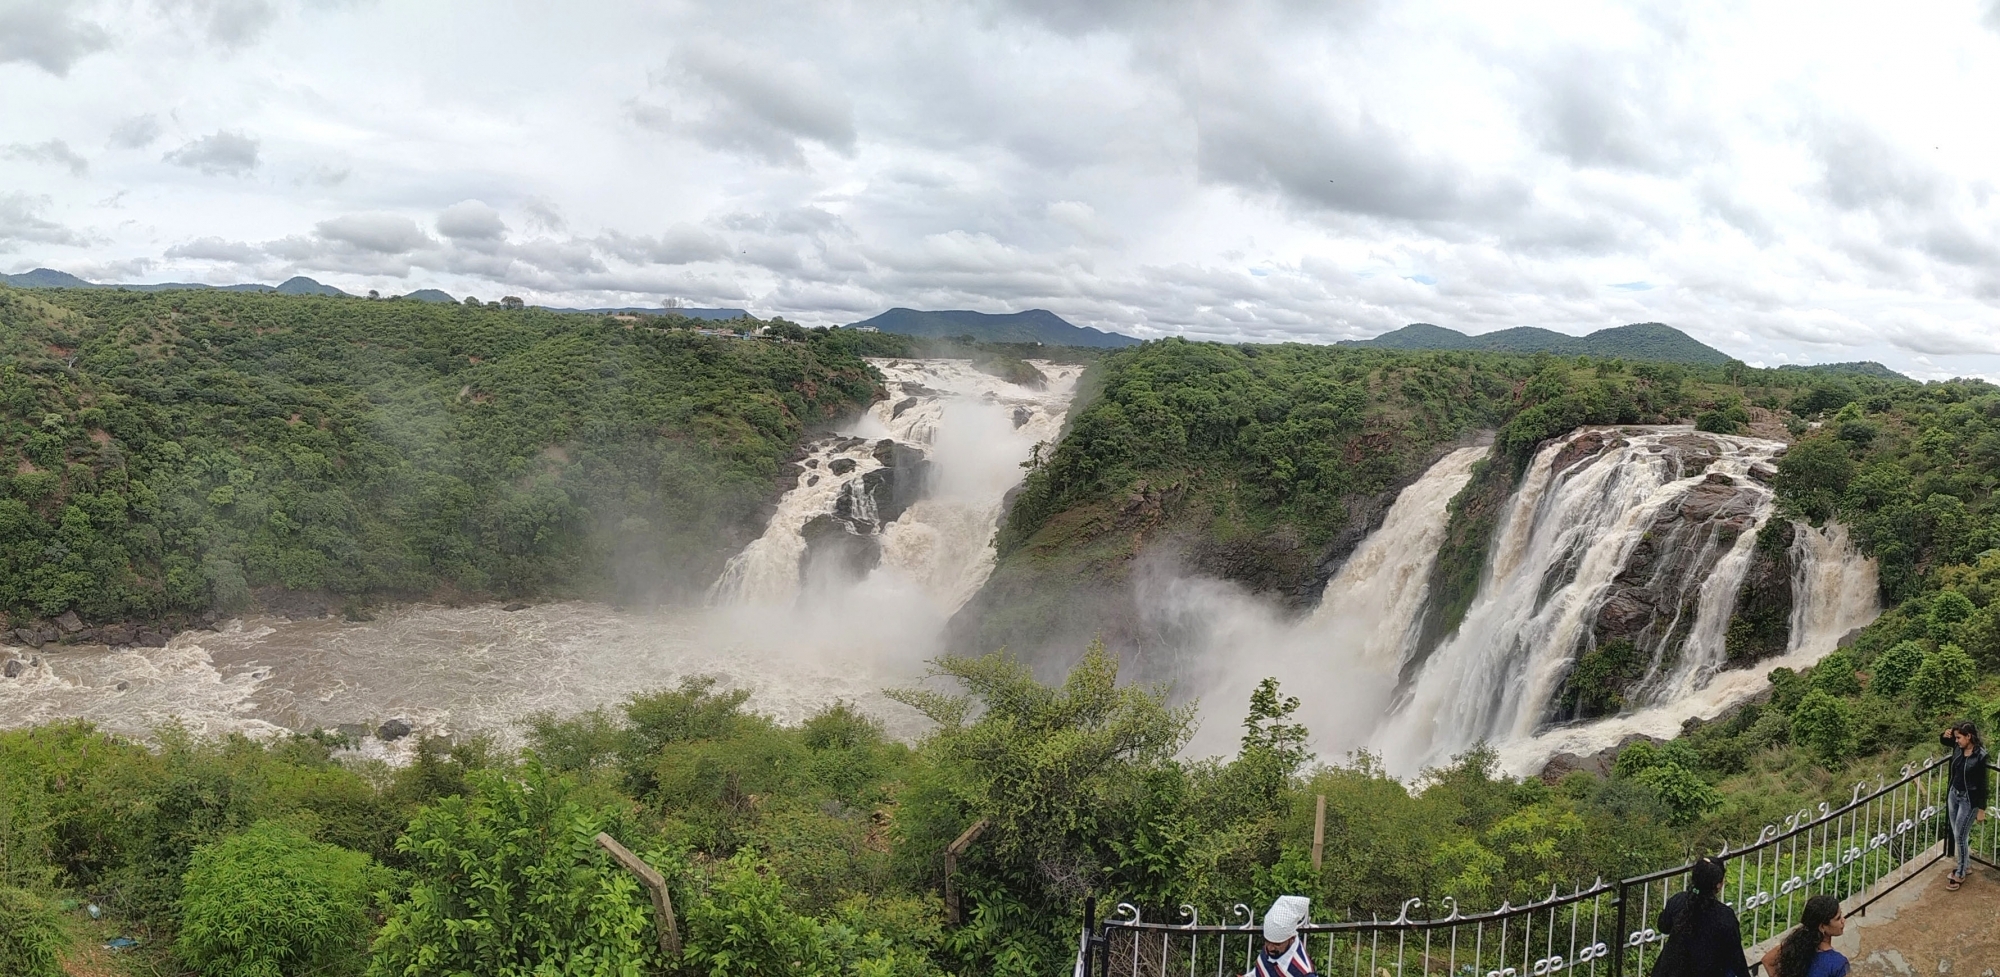 Bengaluru: The Gaganachukki Falls at Shivanasamudra near Bengaluru overflowing due to heavy discharge of water from upstream reservoirs Krishna Raja Sagar (KRS) and Kabini Reservoir, on Aug 7, 2020. (Photo: IANS)